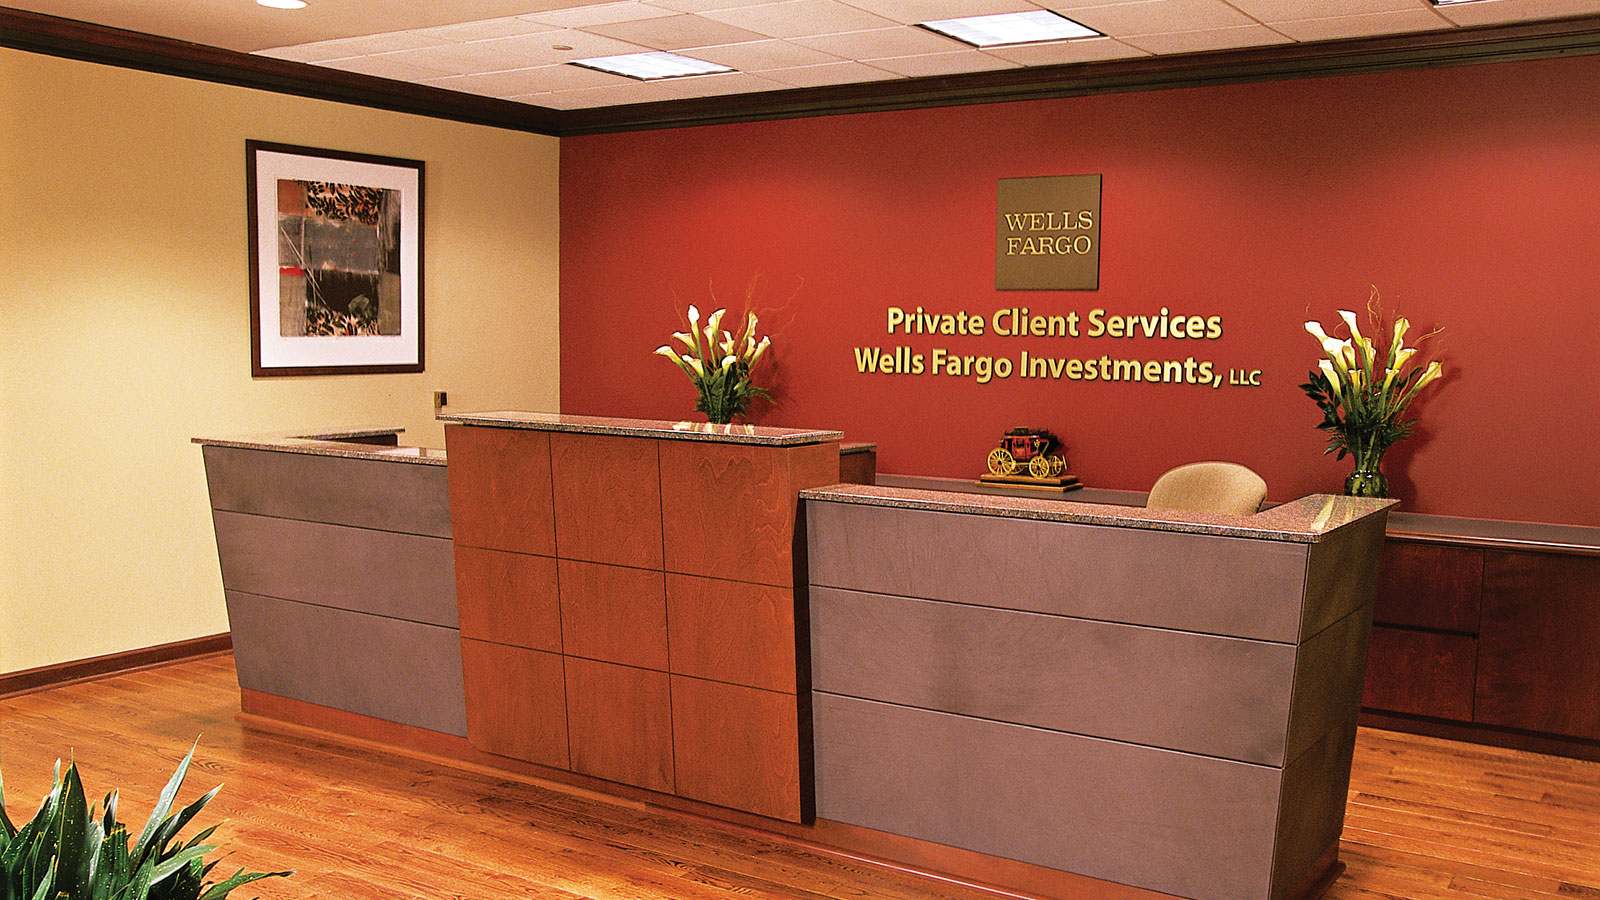 Wells Fargo Private Client Services Davis Partnership